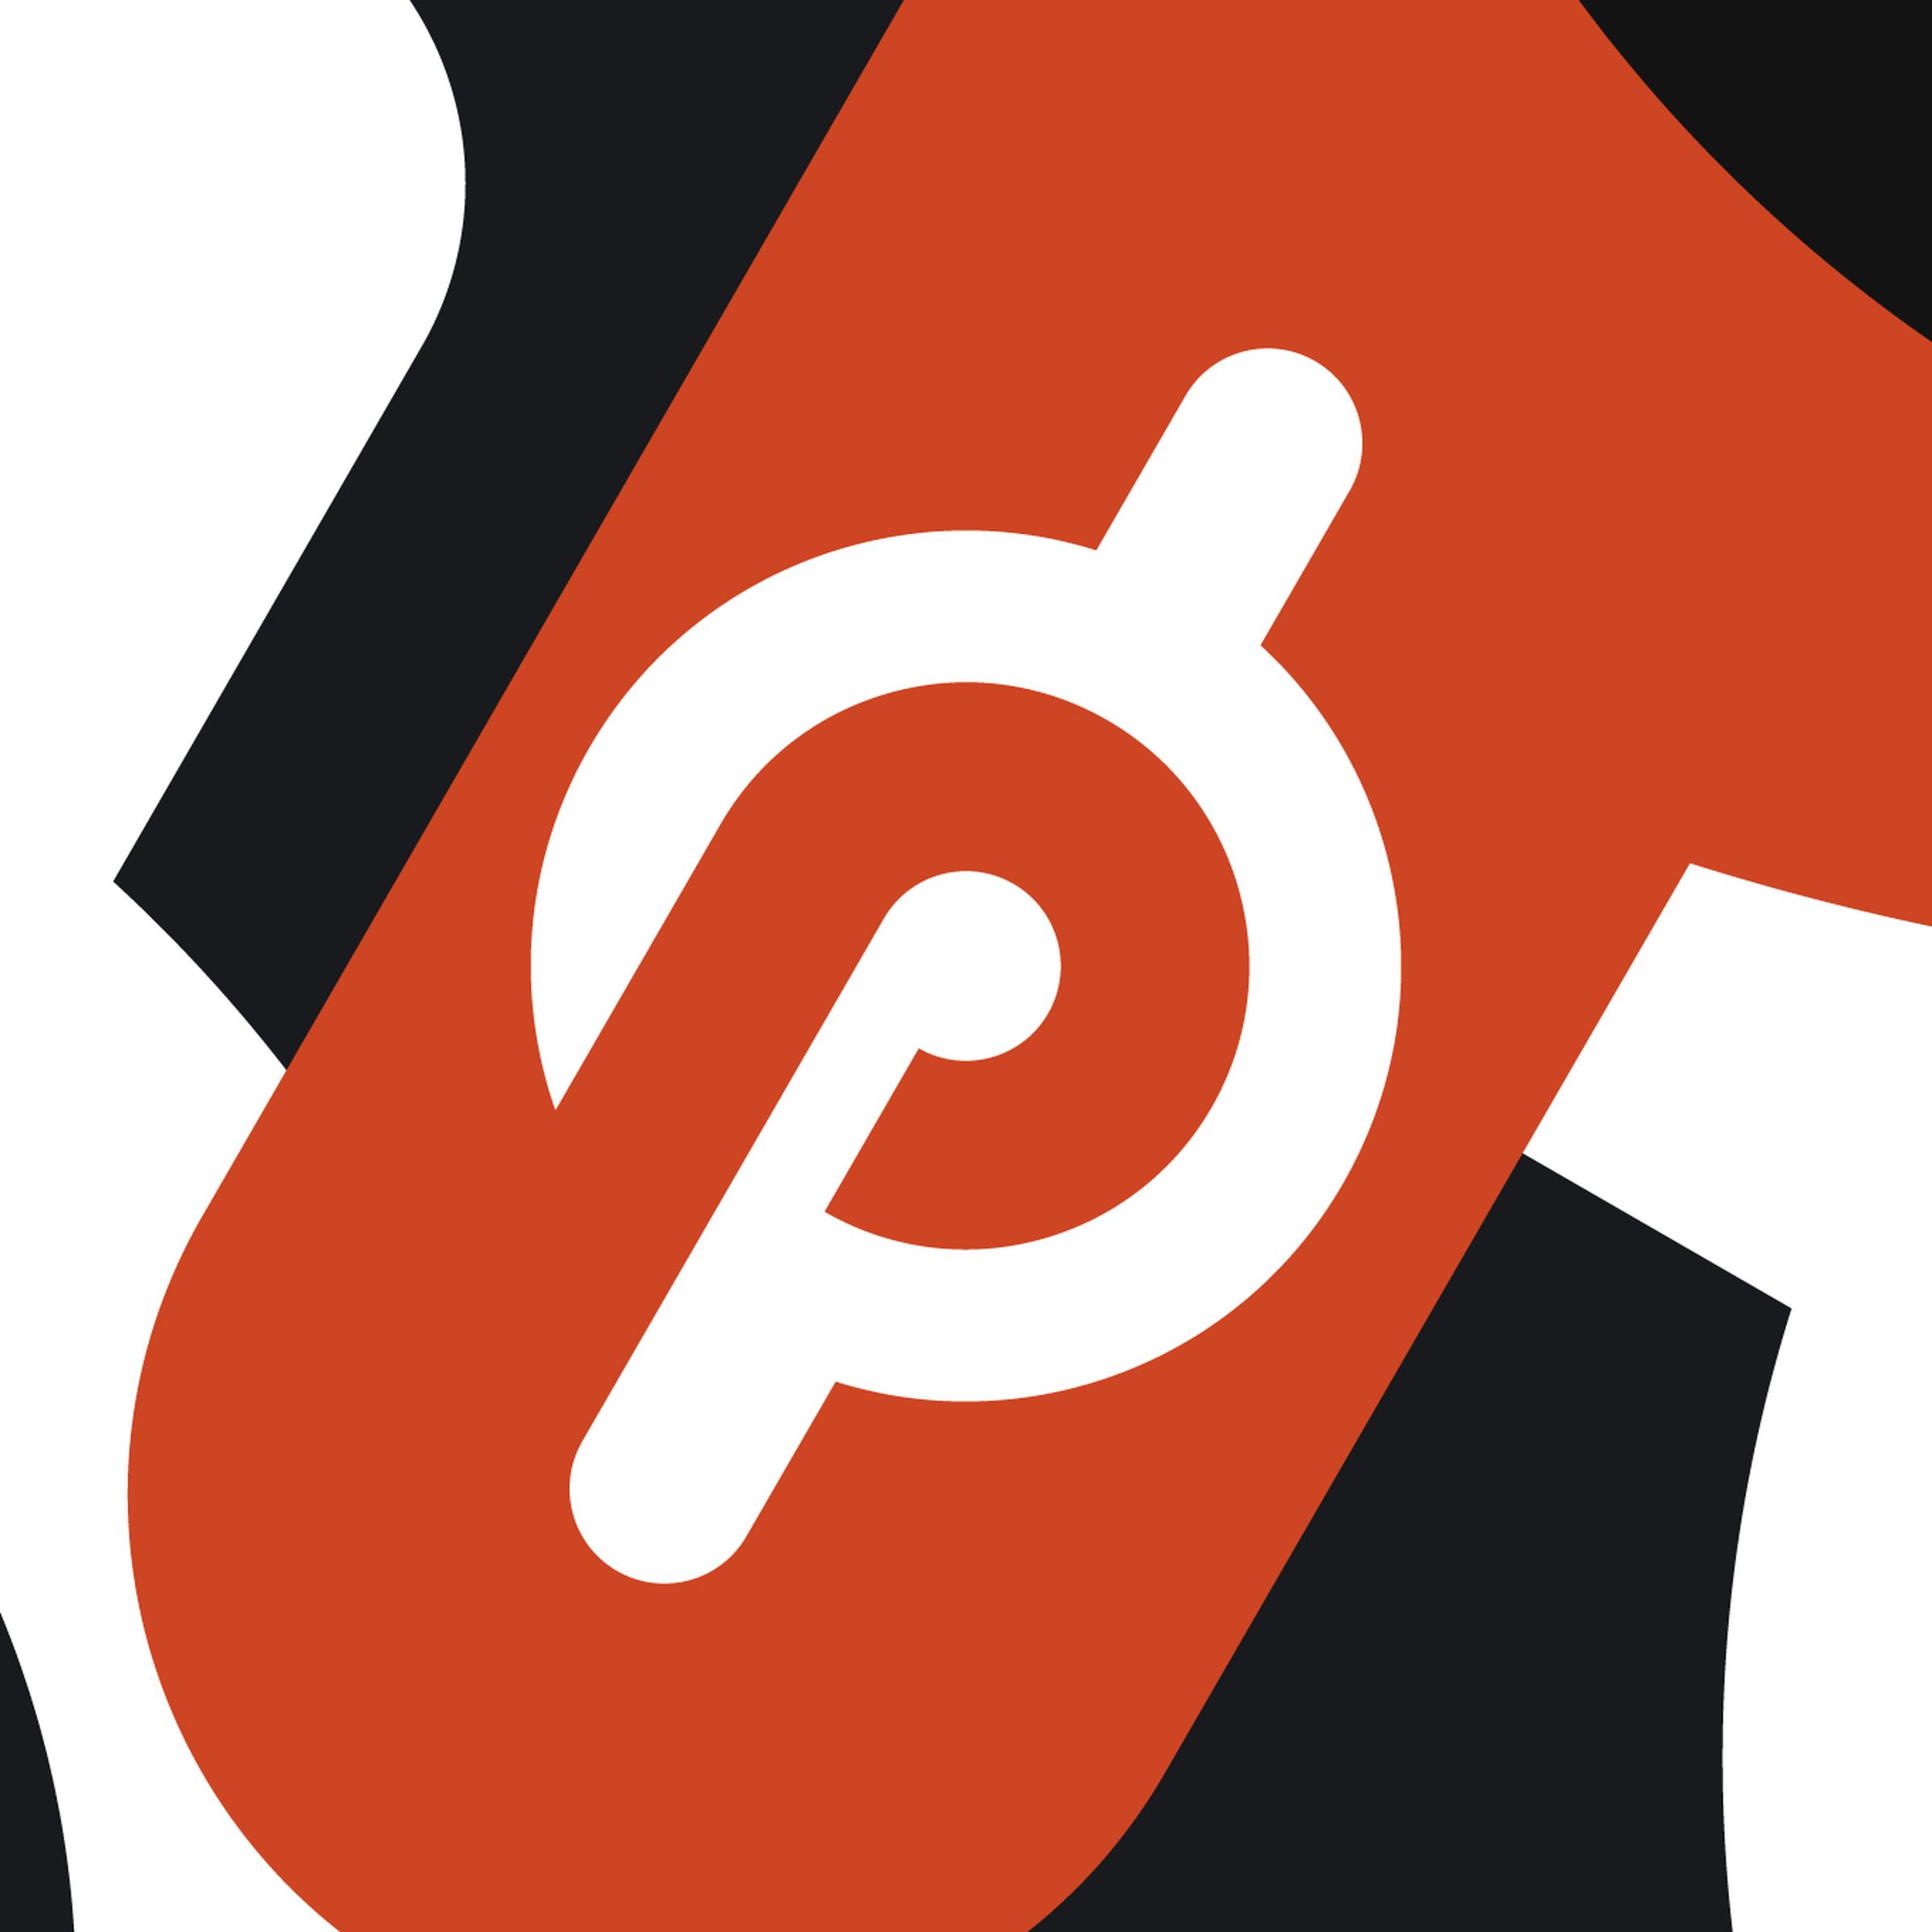 A stock image featuring the Peloton logo.